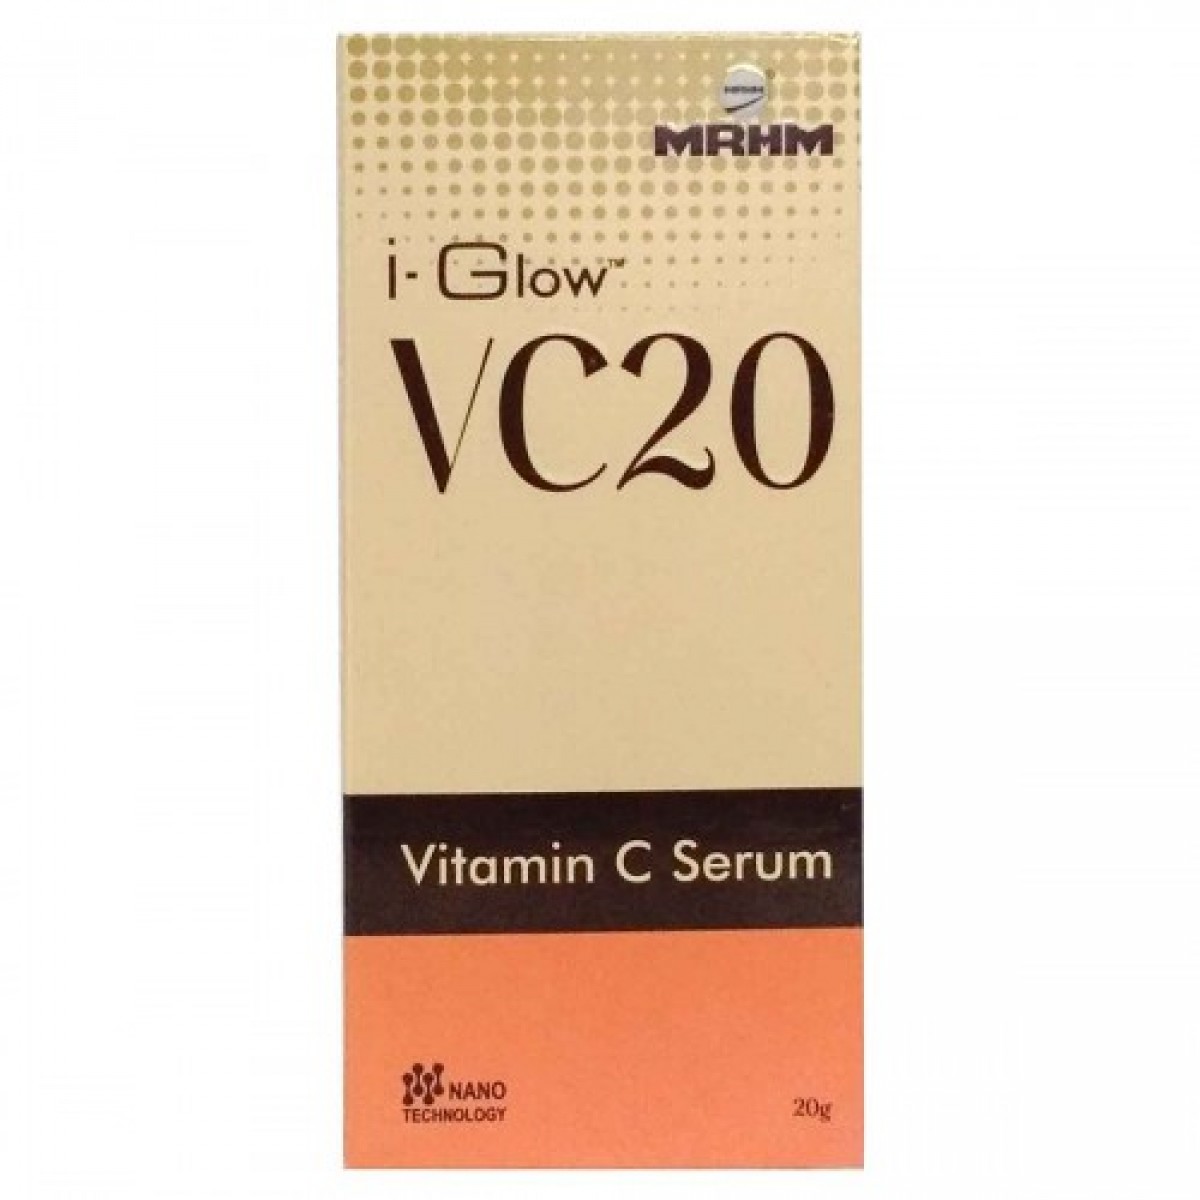  I Glow VC20  Vitamin C Serum 20g 